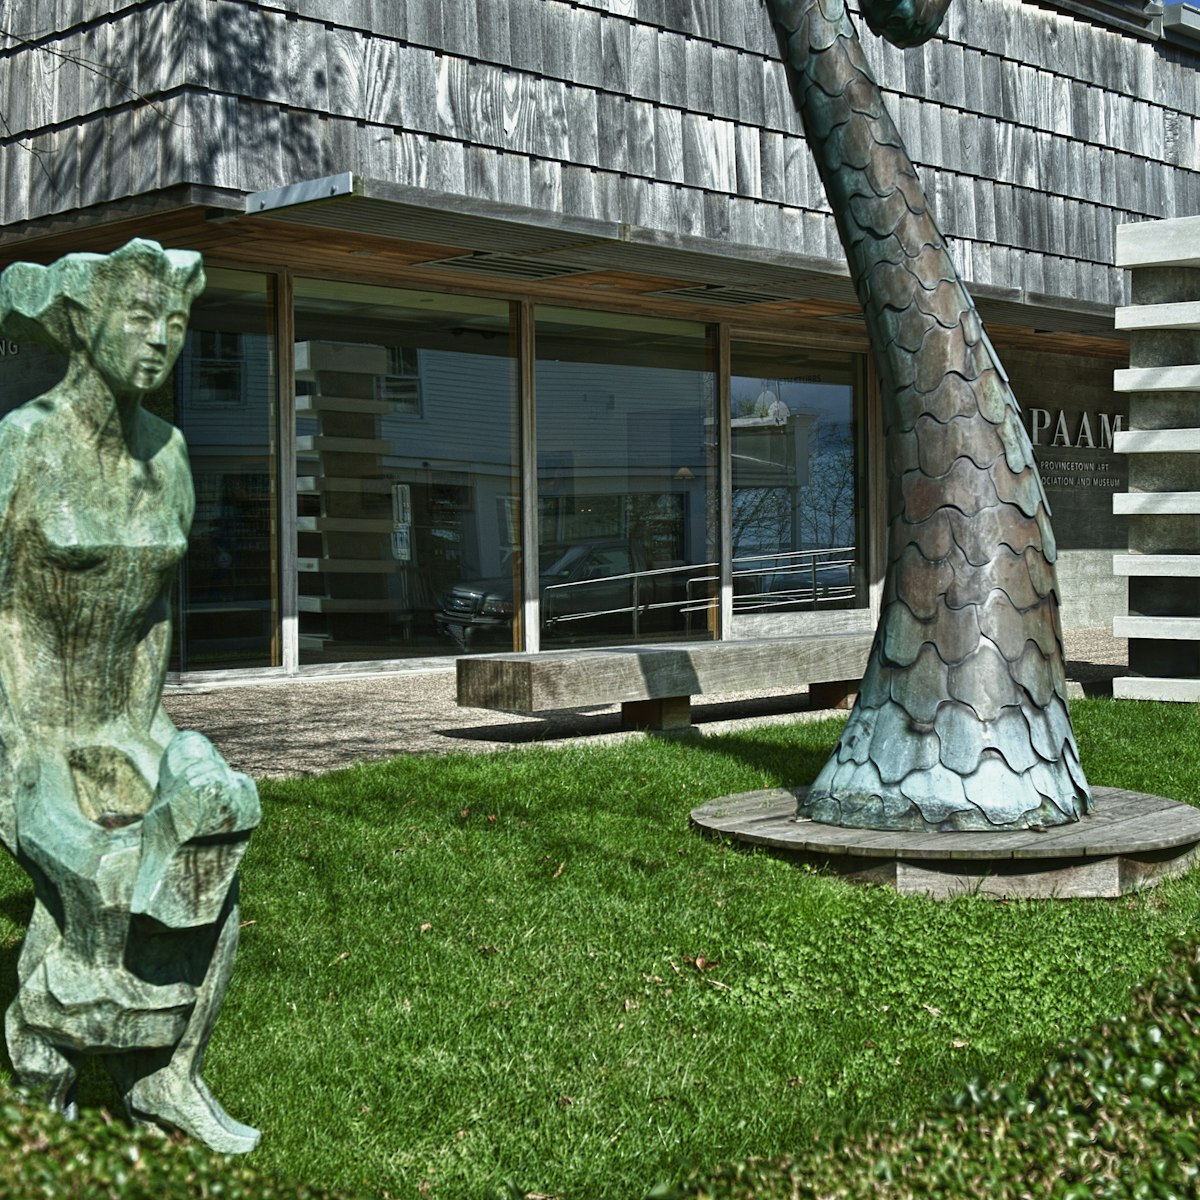 Provincetown Art Association and Museum, Cape Cod, Massachusetts, USA